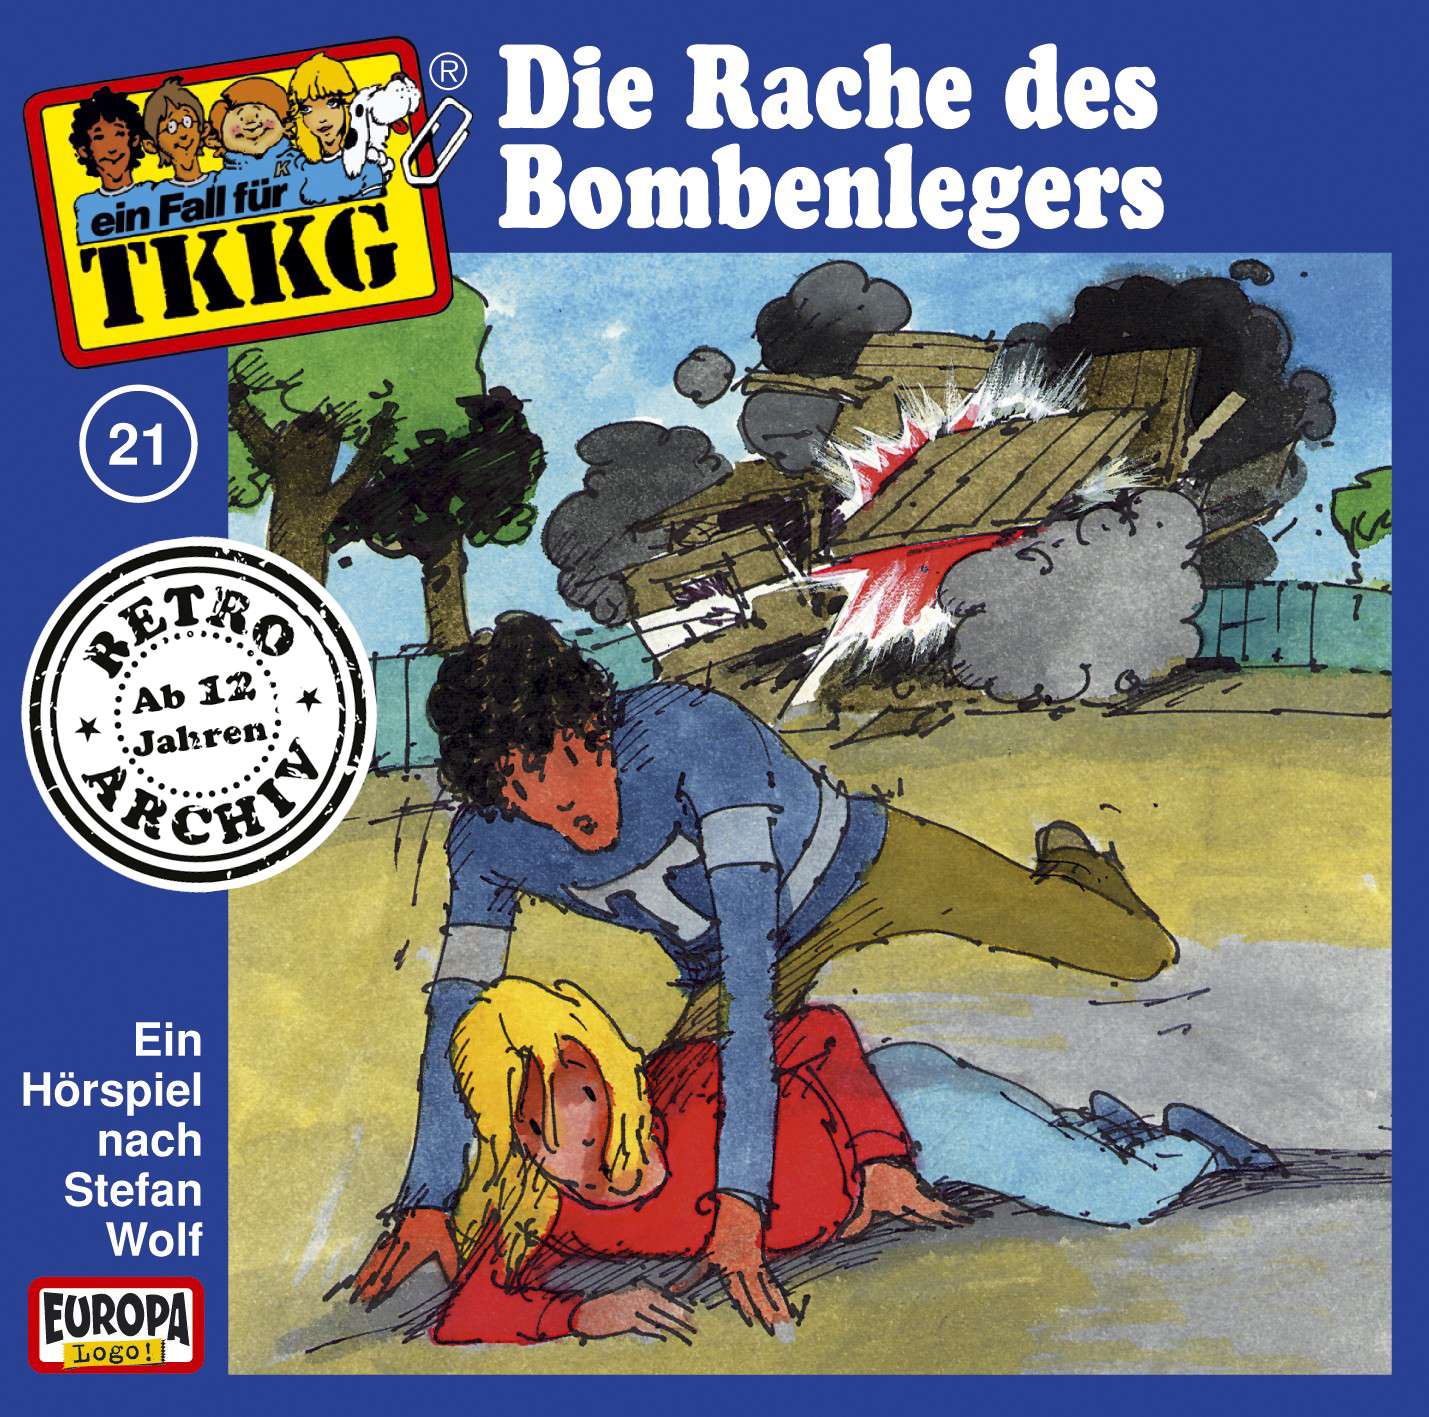 TKKG Retro-Archiv - Die Rache des Bombenlegers